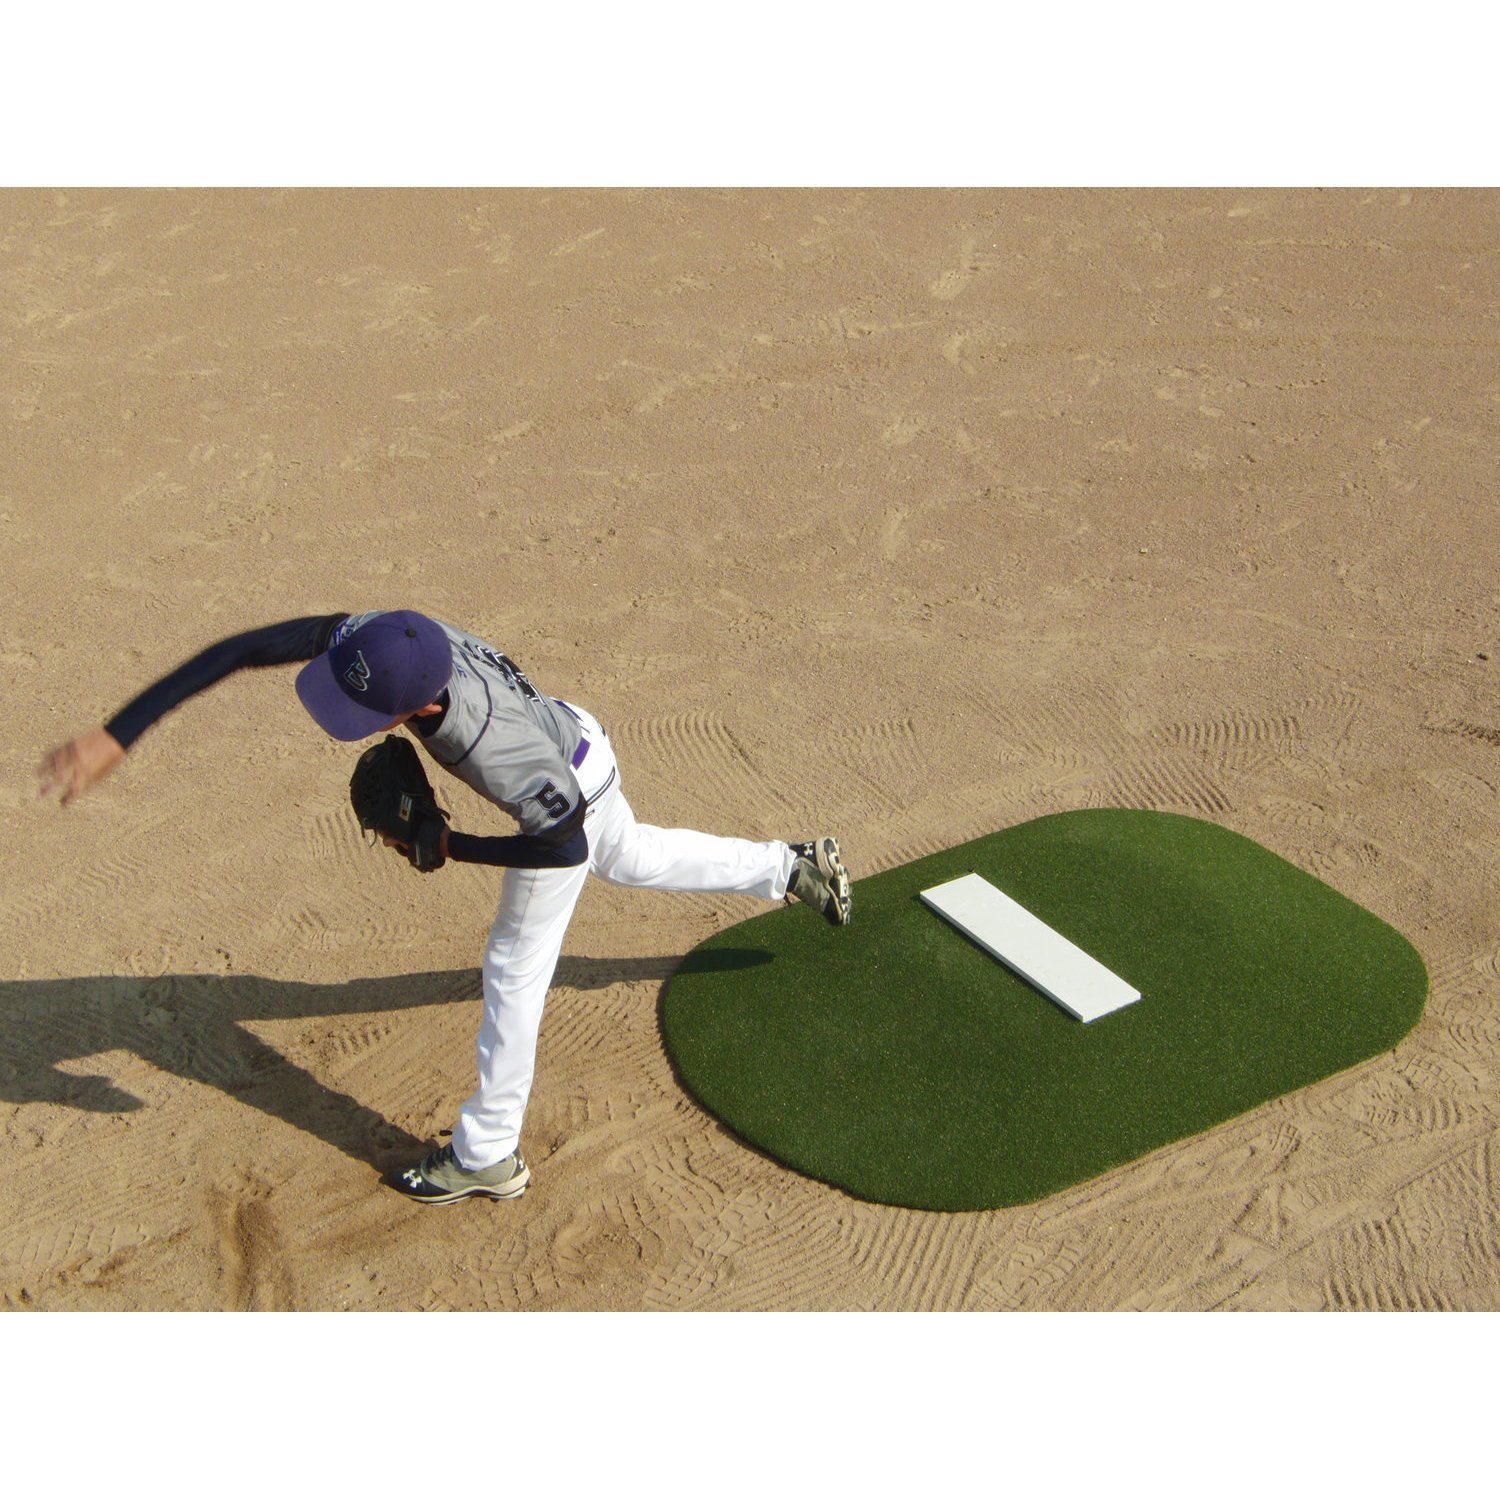 PortoLite 6" Stride Off Portable Game Pitching Mound For Baseball